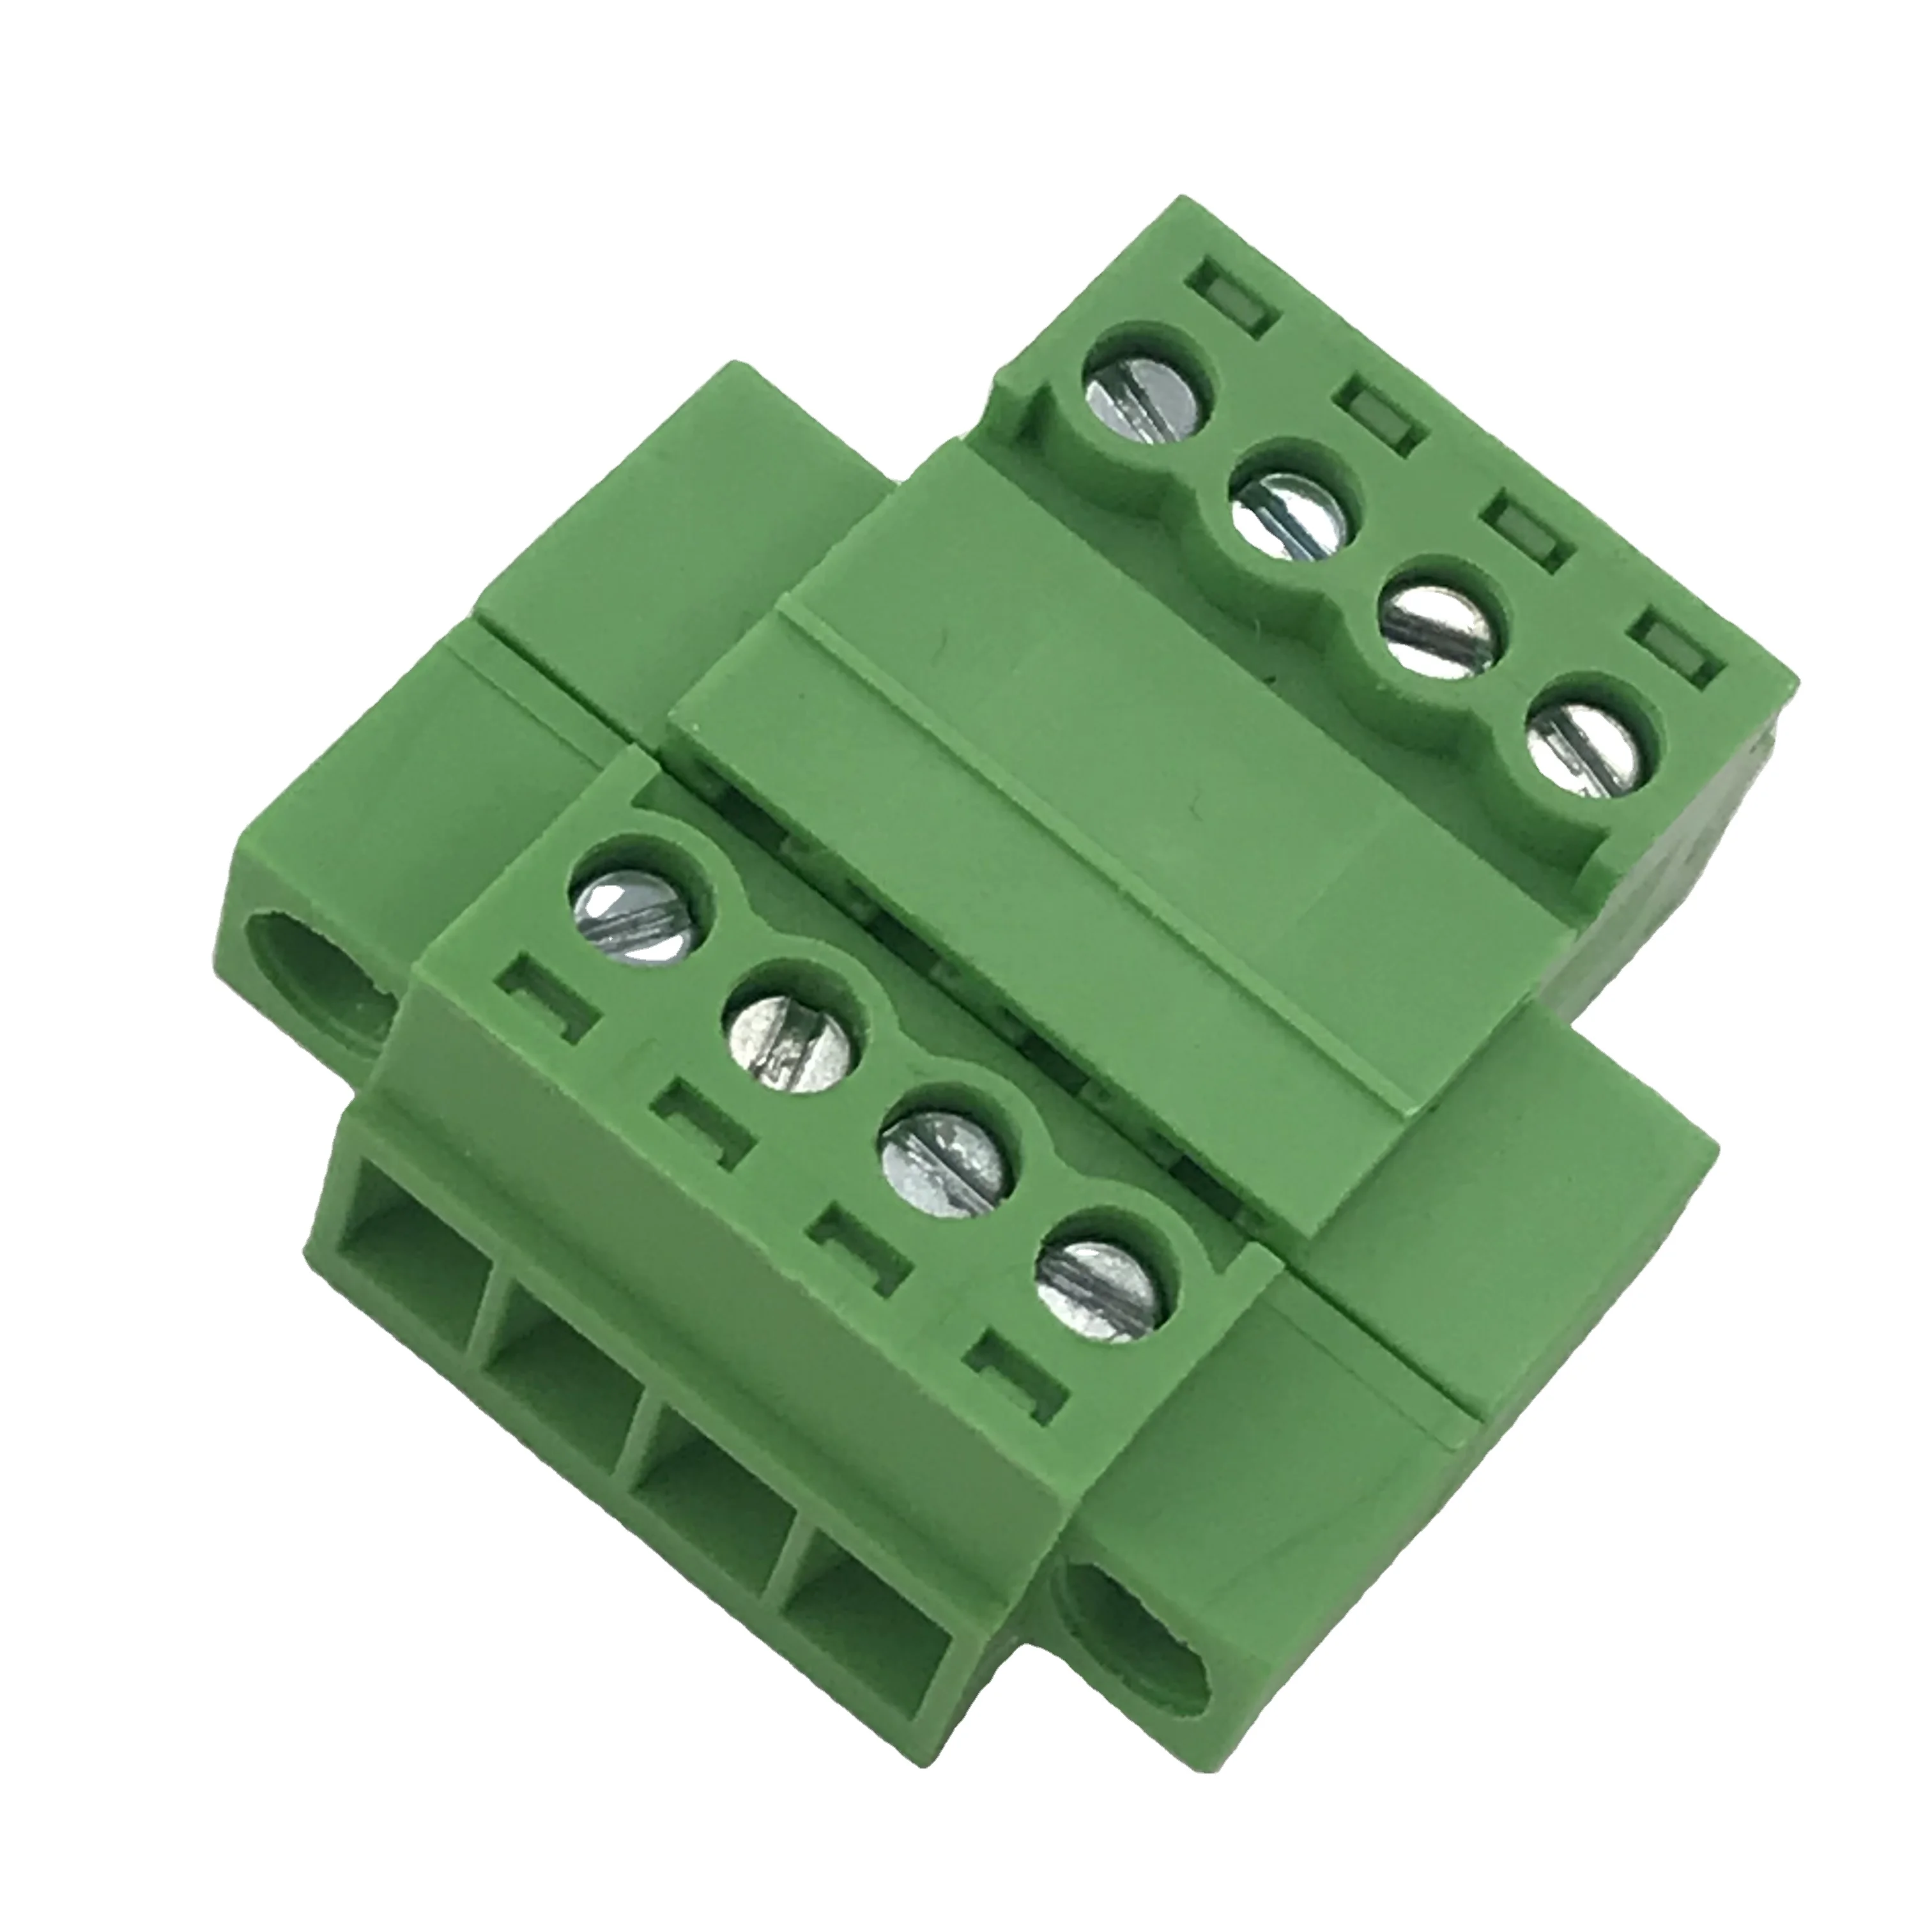 Male/Female phoenix-style terminal block connector set (6 pins)